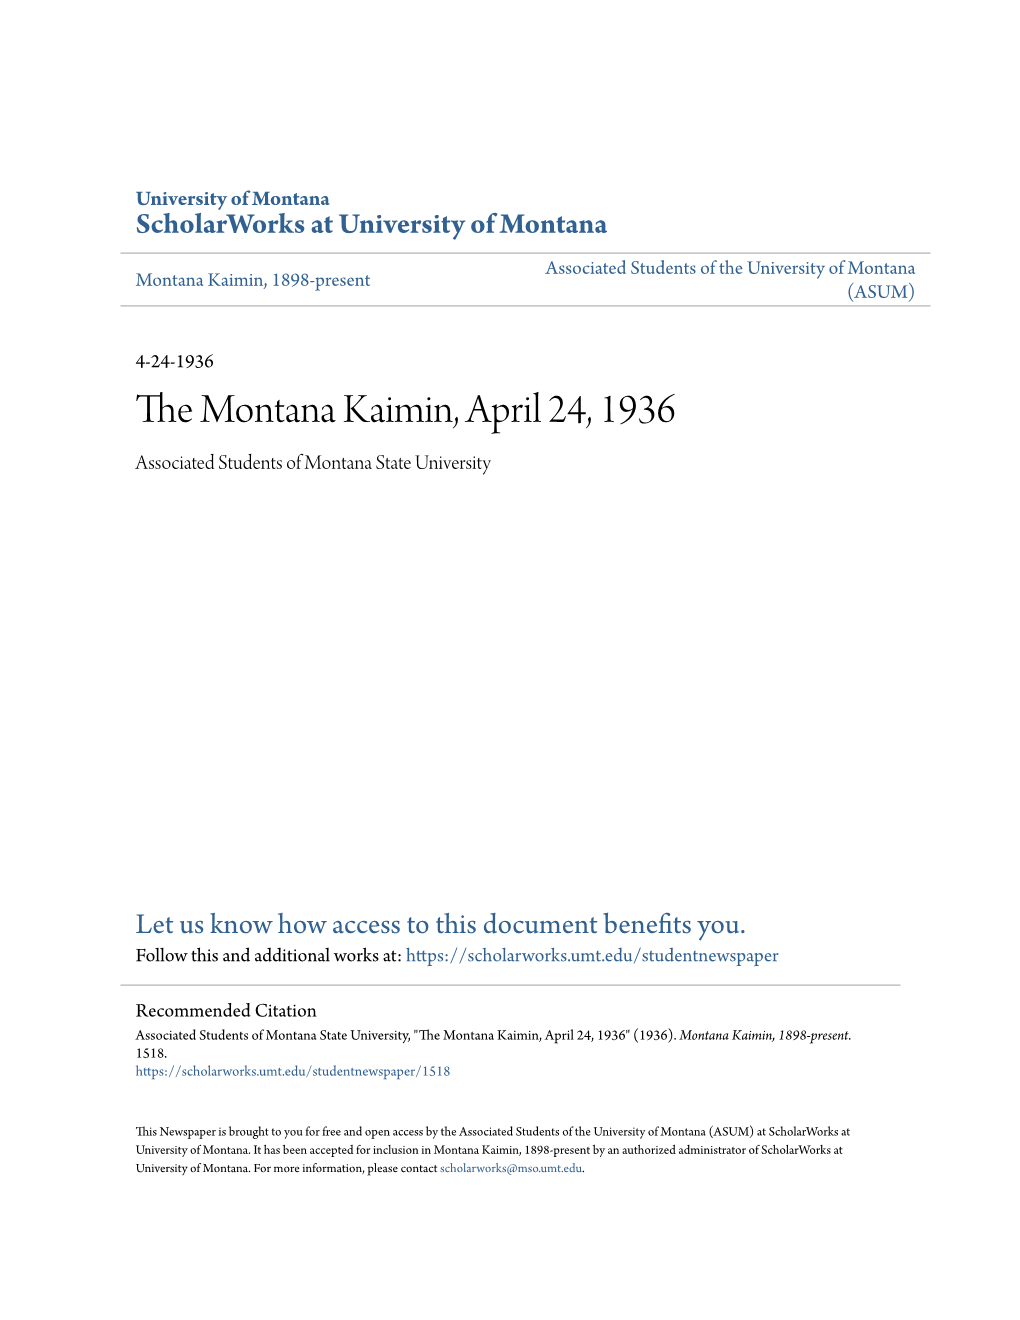 The Montana Kaimin, April 24, 1936